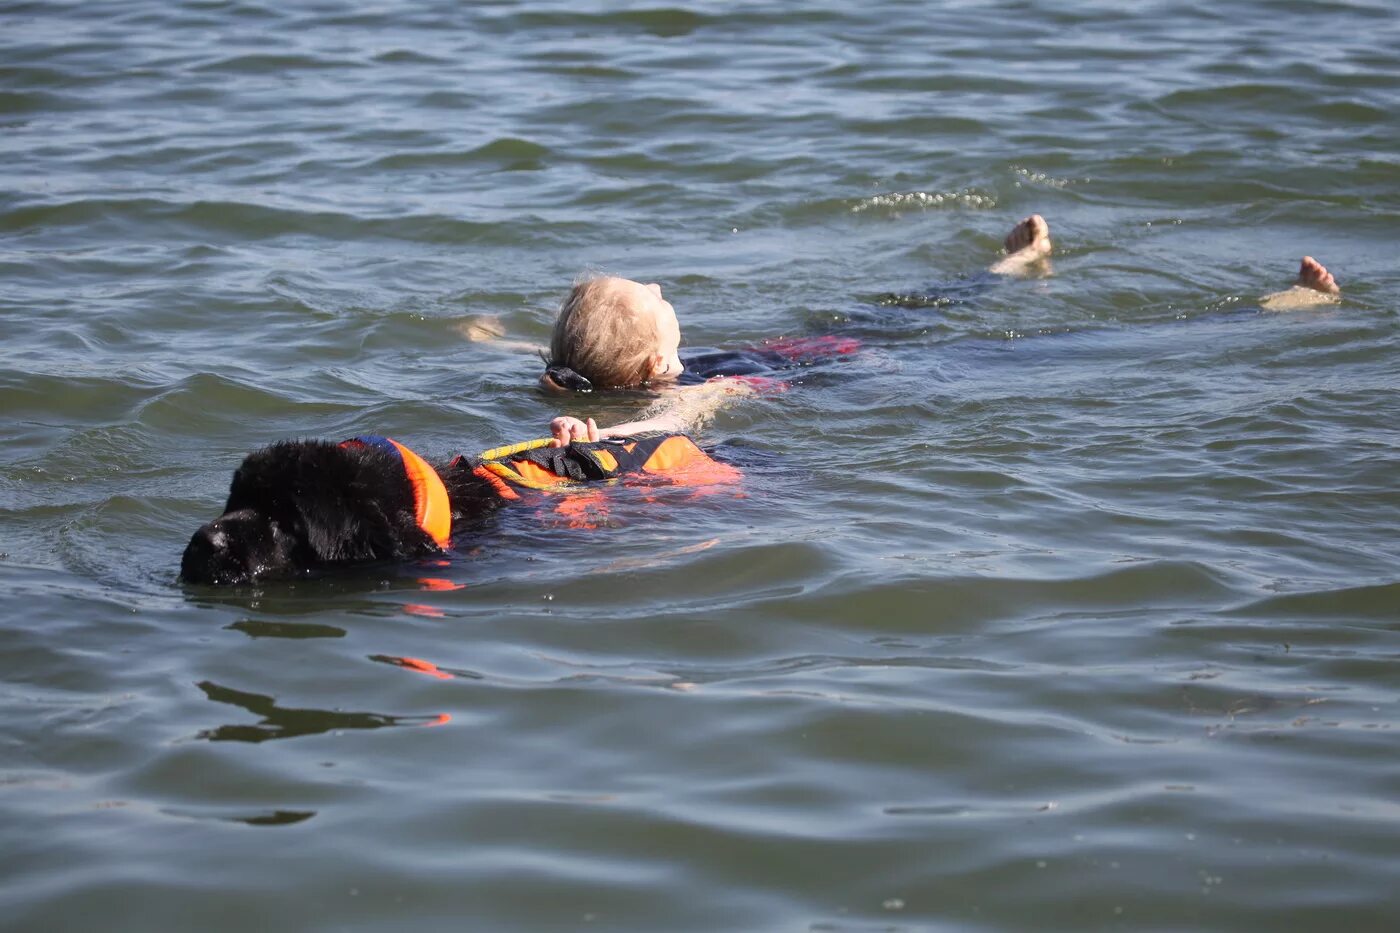 Водолаз ньюфаундленд спасатель. Собака спасатель ньюфаундленд. Ньюфаундленд собака спасает людей. Собака спасатель на воде ньюфаундленд.